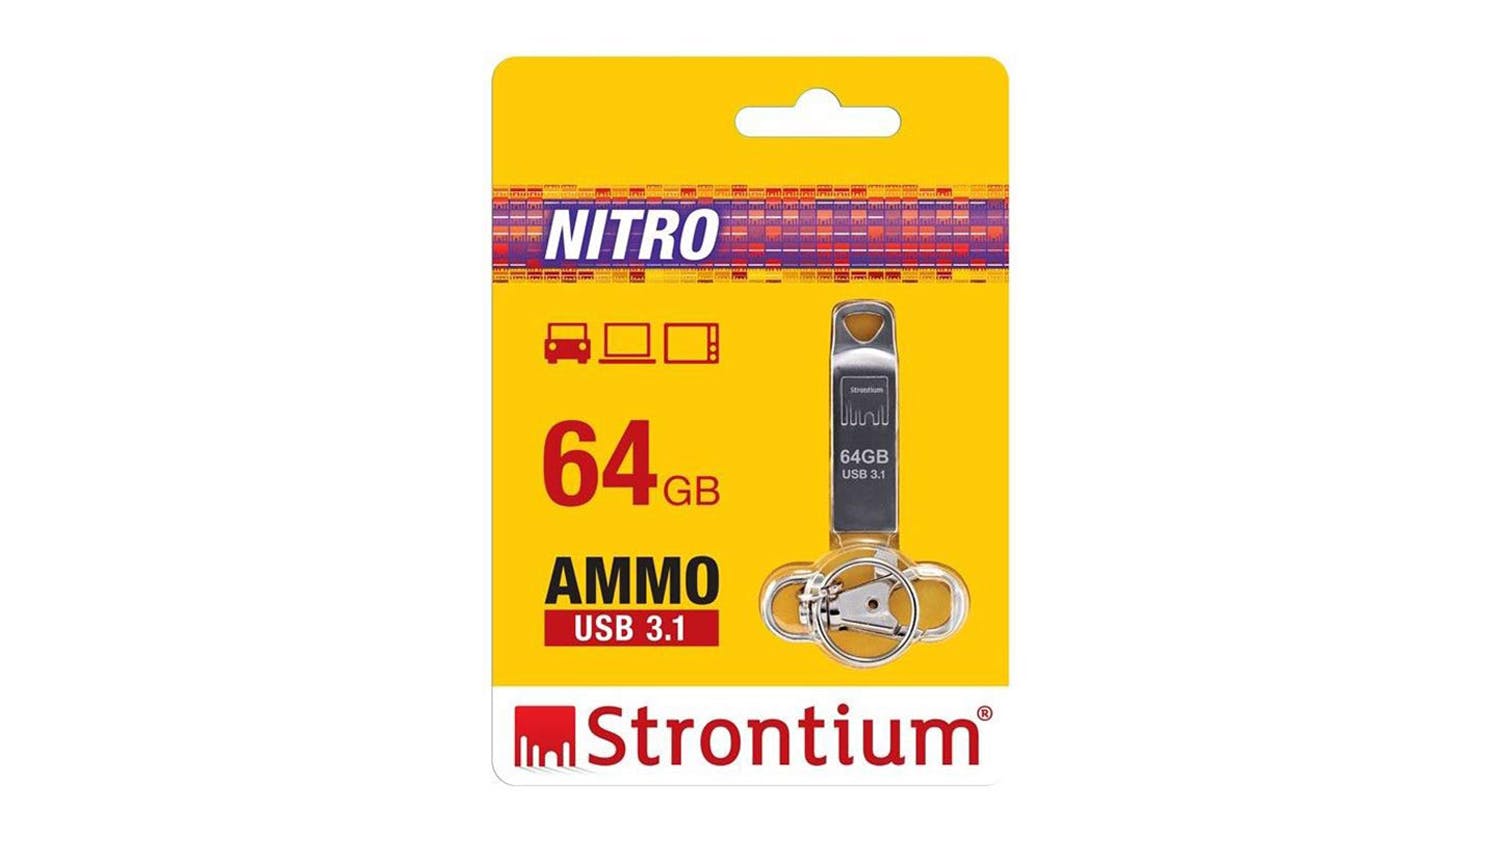 Strontium Ammo 3.1 USB Flash Drive - 64GB